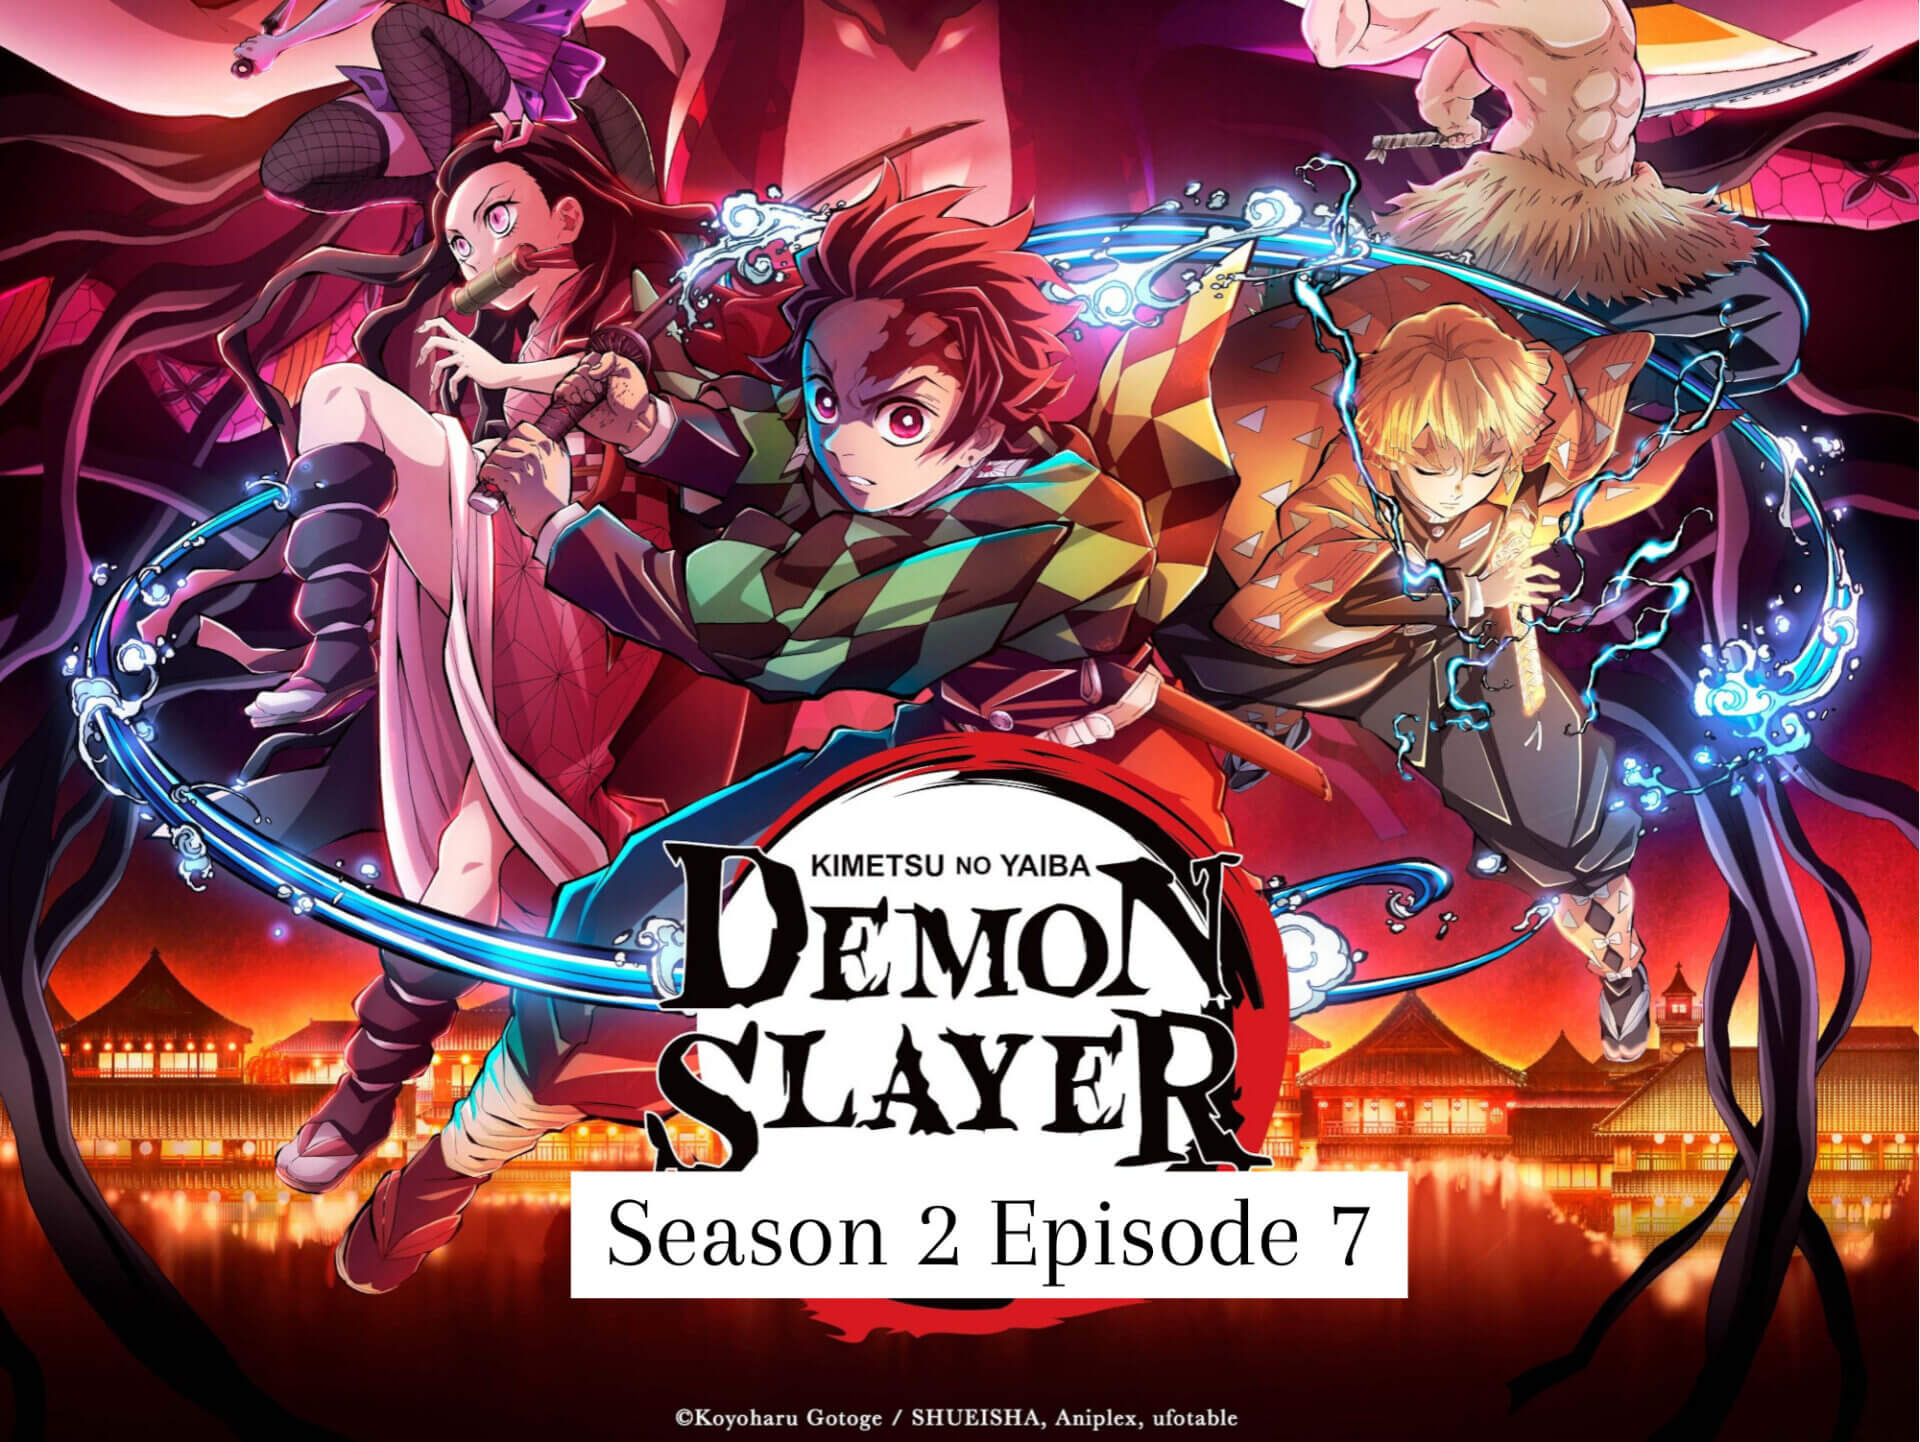 Demon slayer season 2 episode 7